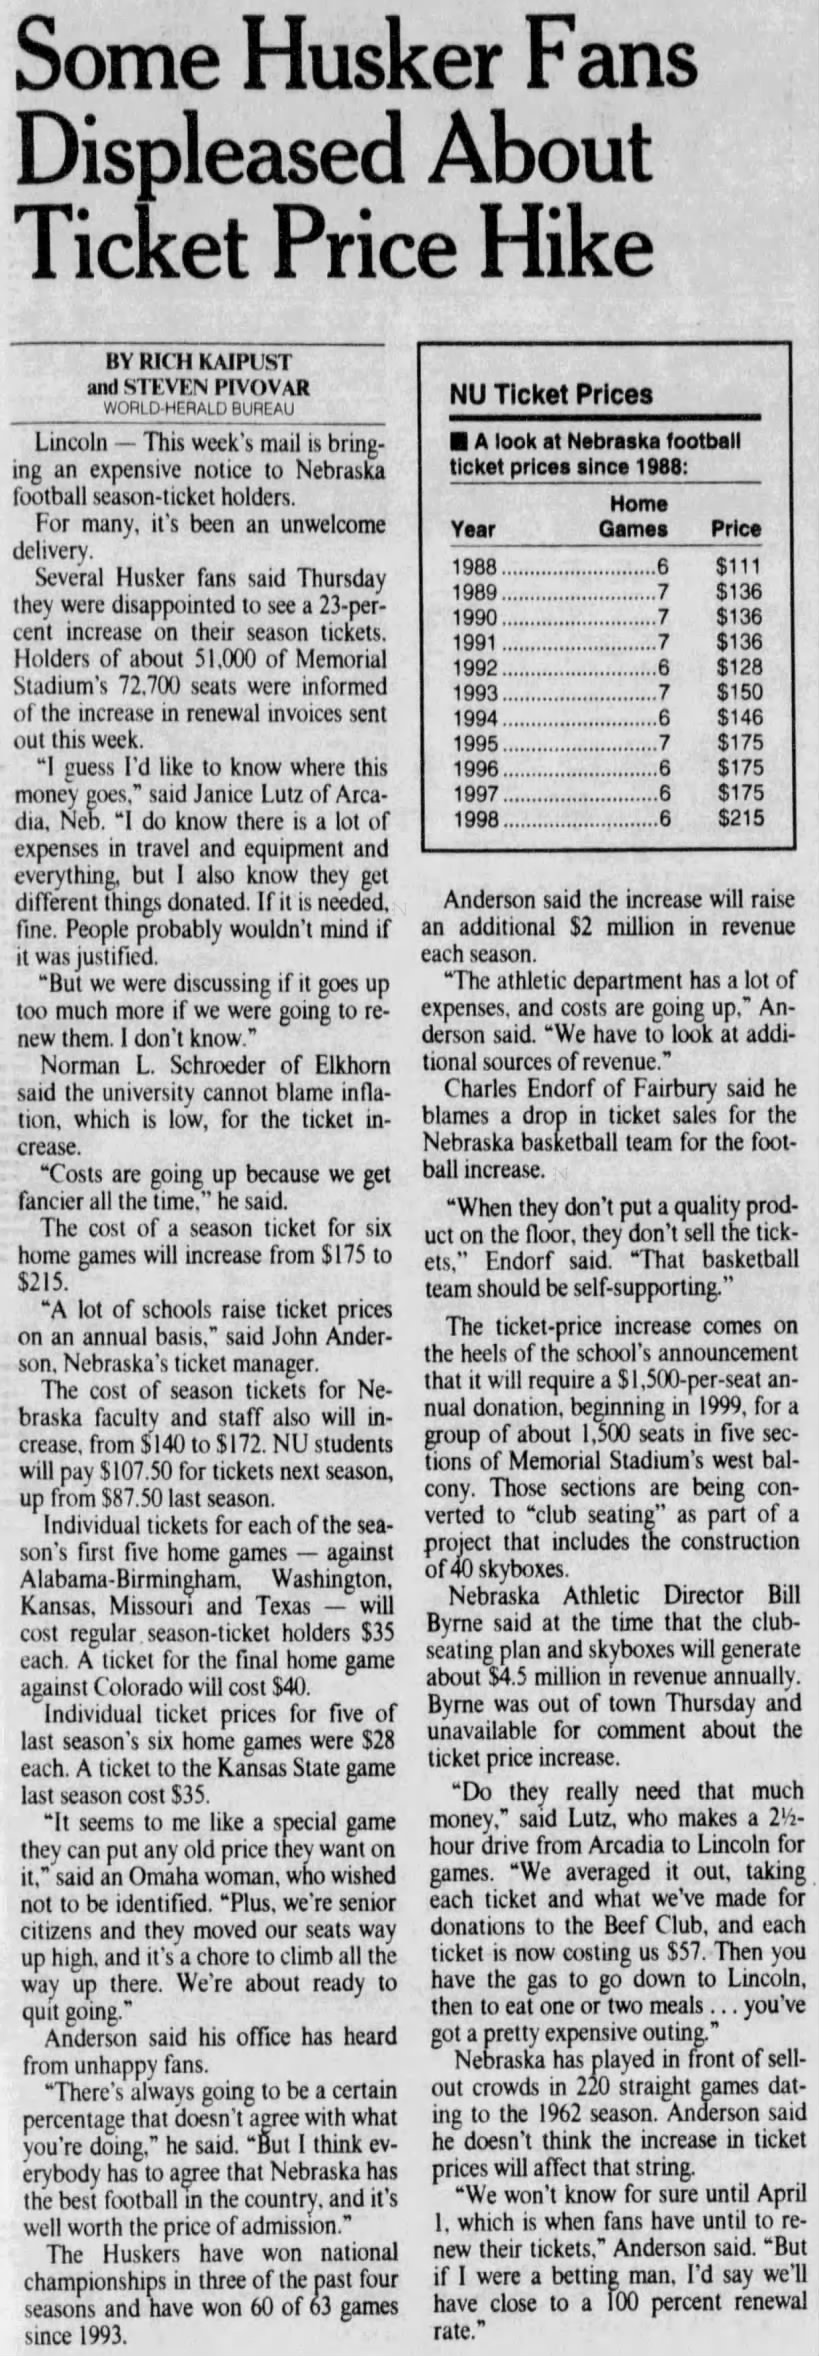 1998 Nebraska football ticket prices